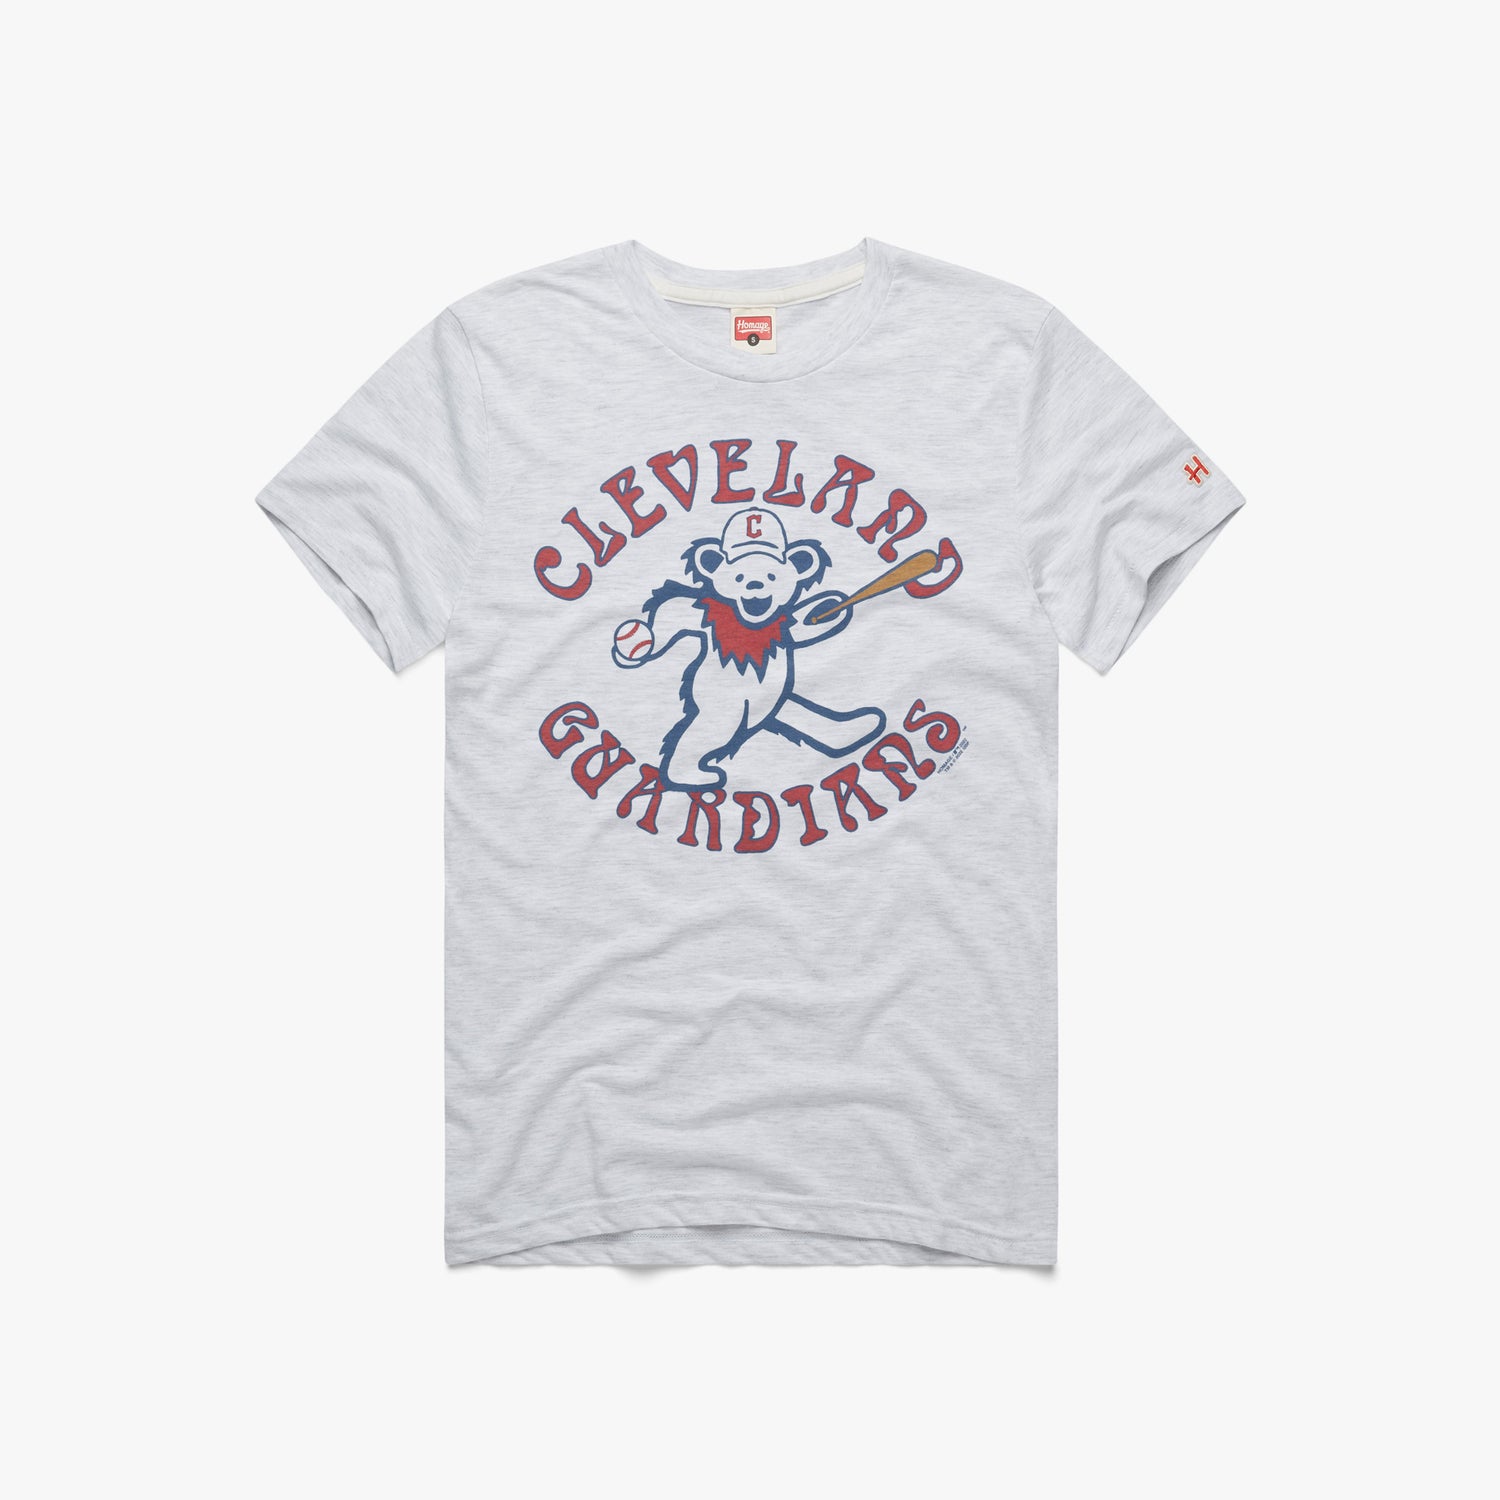 Detroit Tigers The Grateful Dead Baseball MLB Mashup Women's T-Shirt 